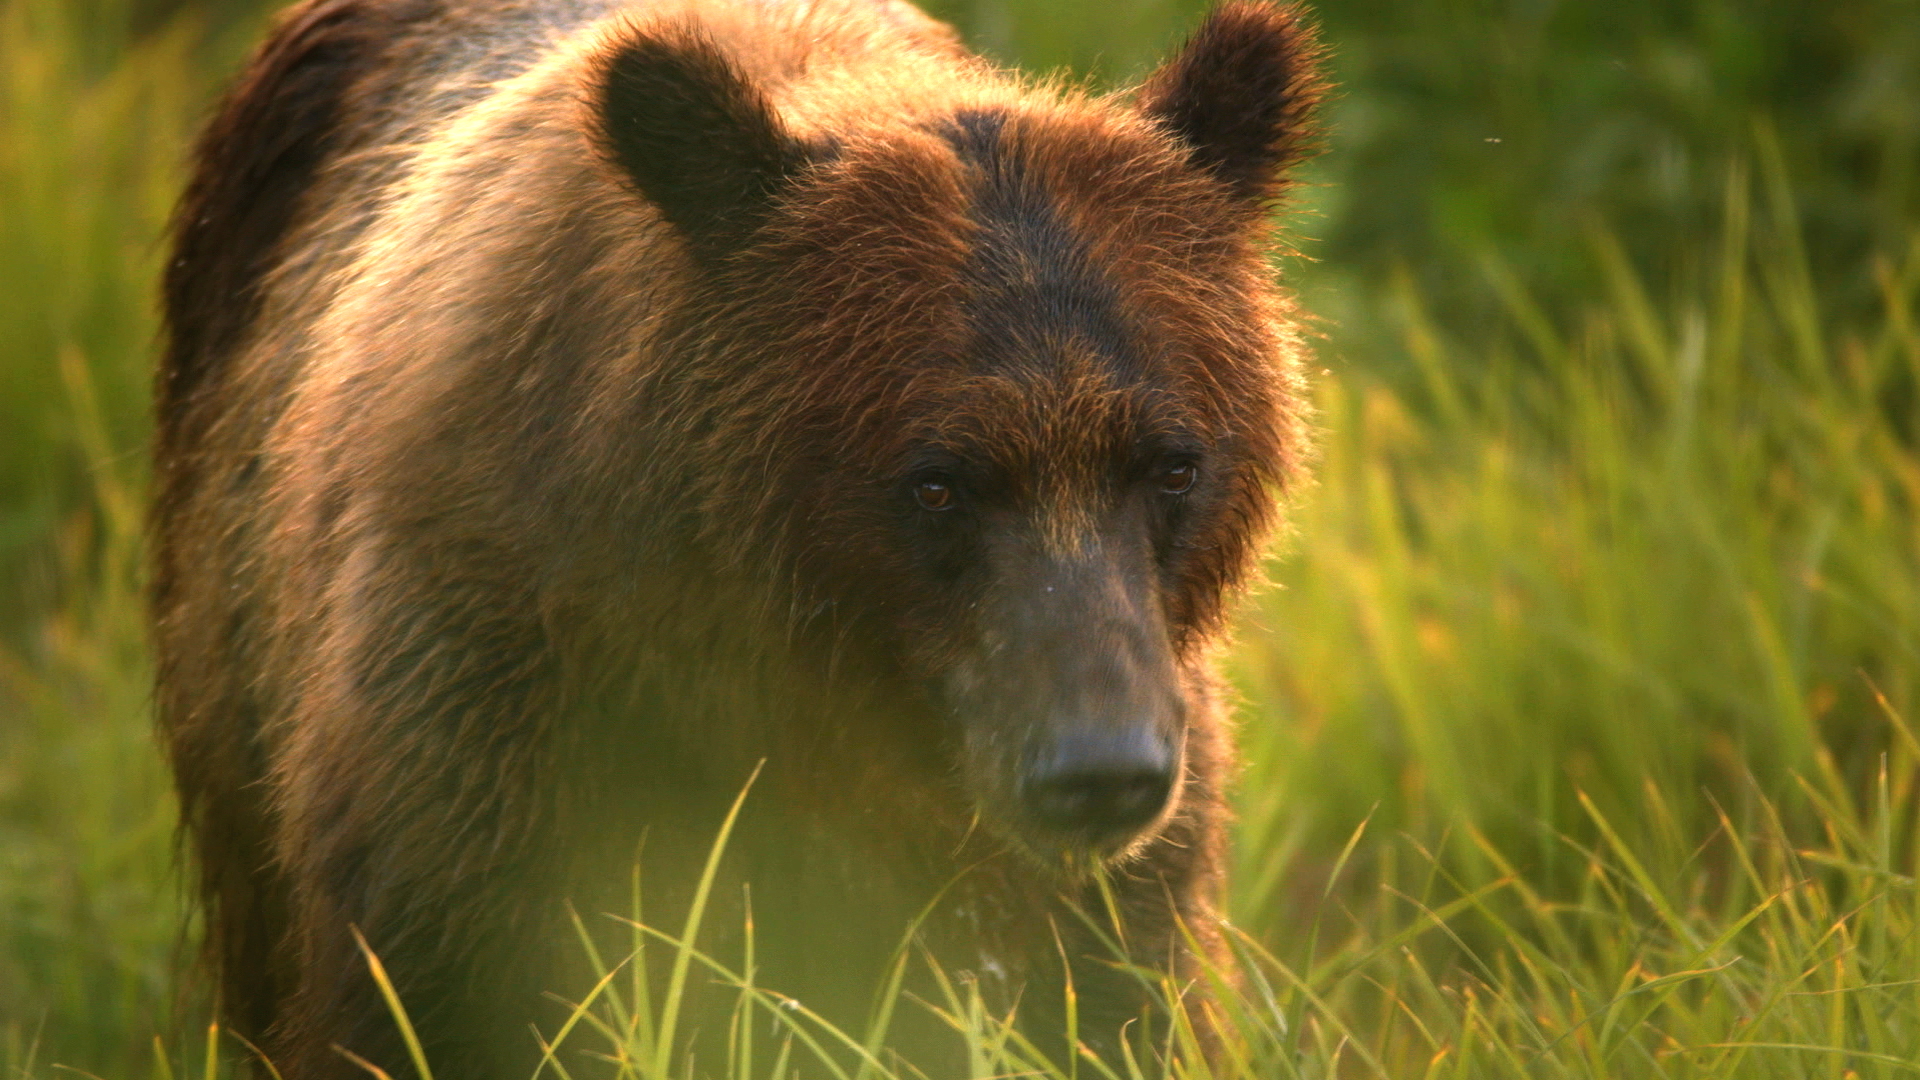 Cameraman's Wild Encounter With Bears in Alaska